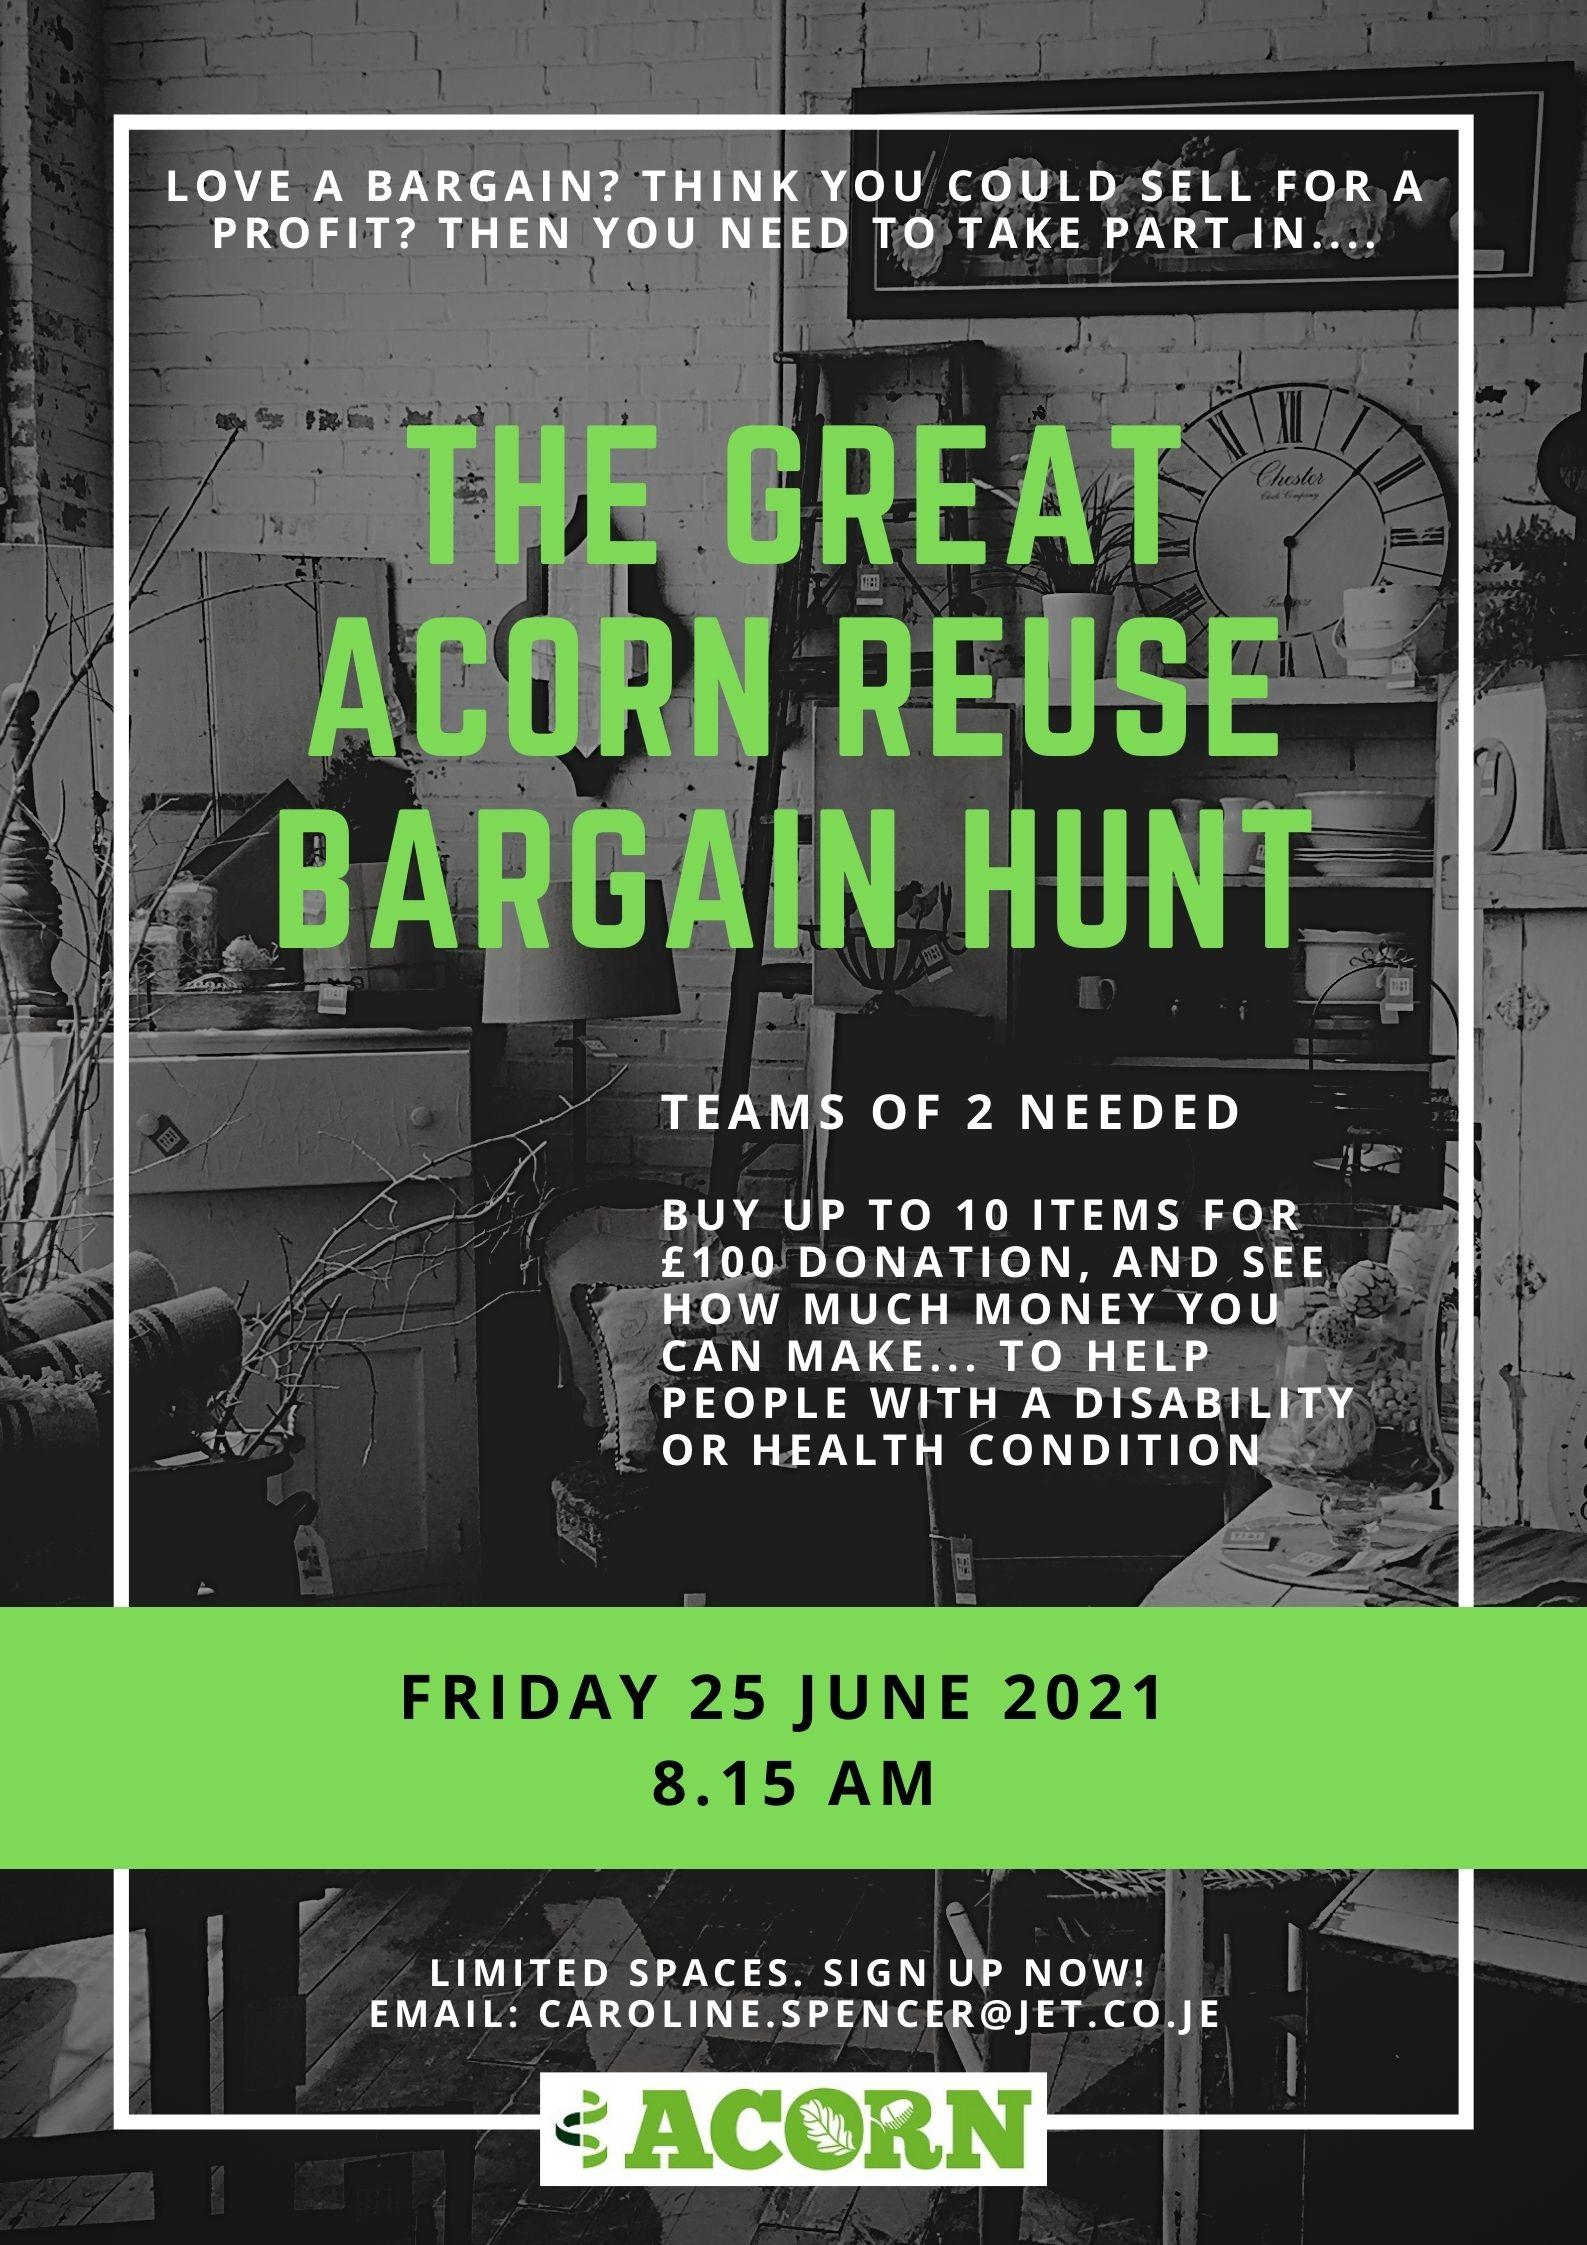 Acorn Bargain hunt